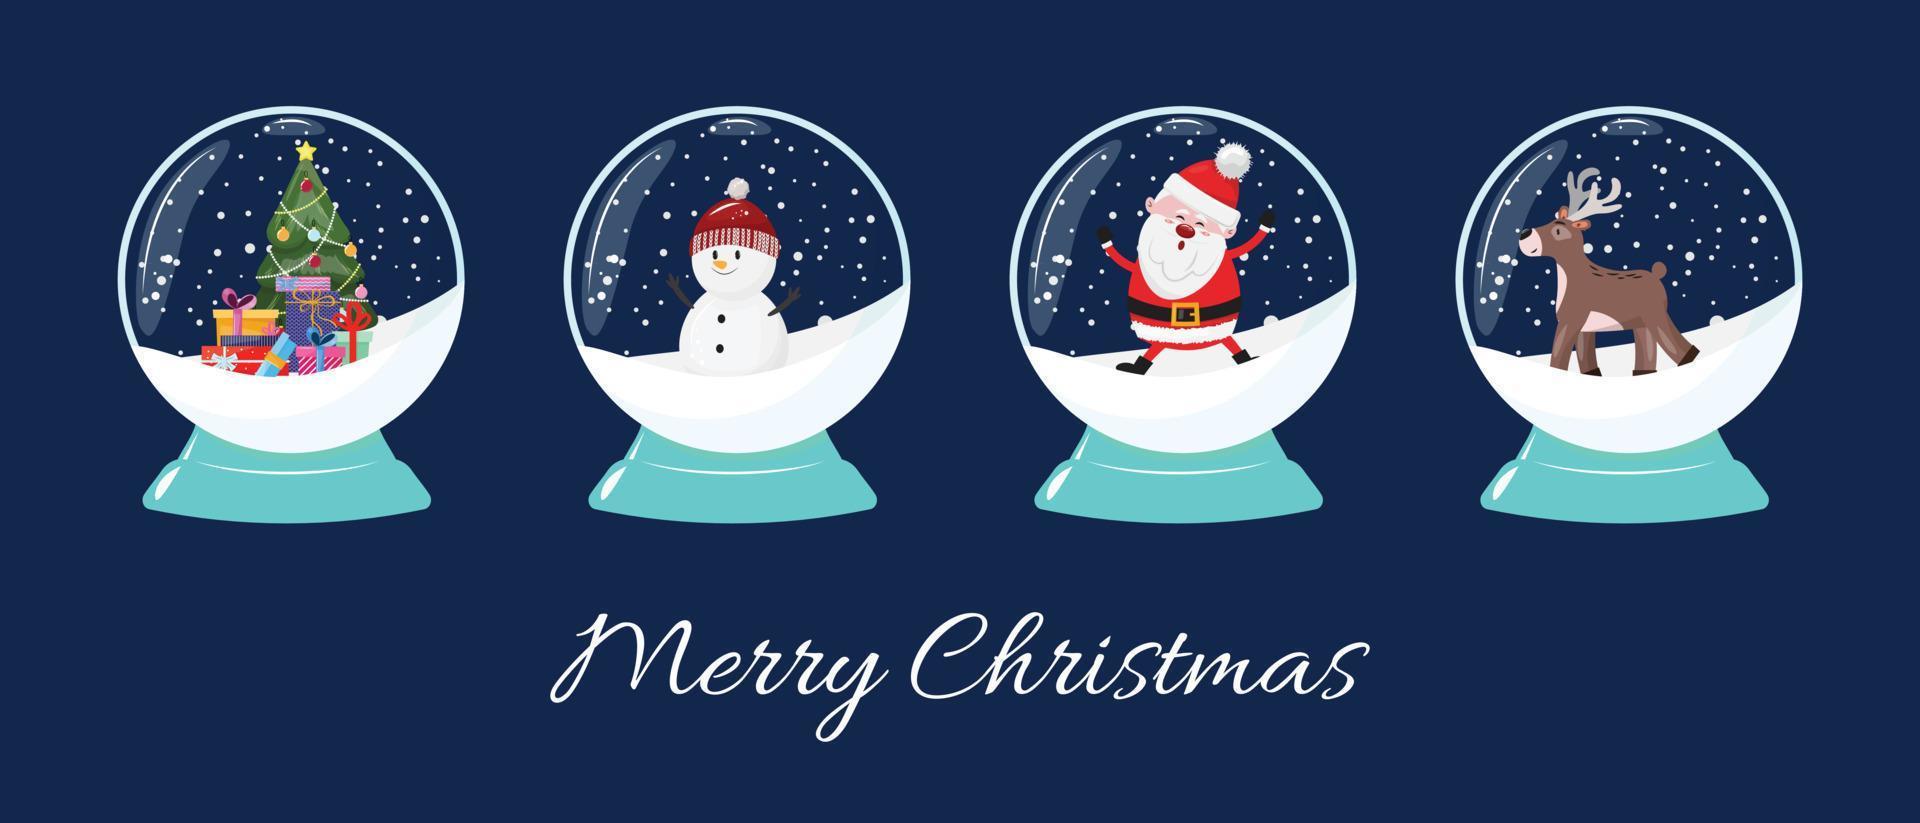 Christmas cartoon illustration of snow globes with snowman, Santa Claus, Christmas tree, reindeer. Seasonal holiday, Christmas illustration. vector